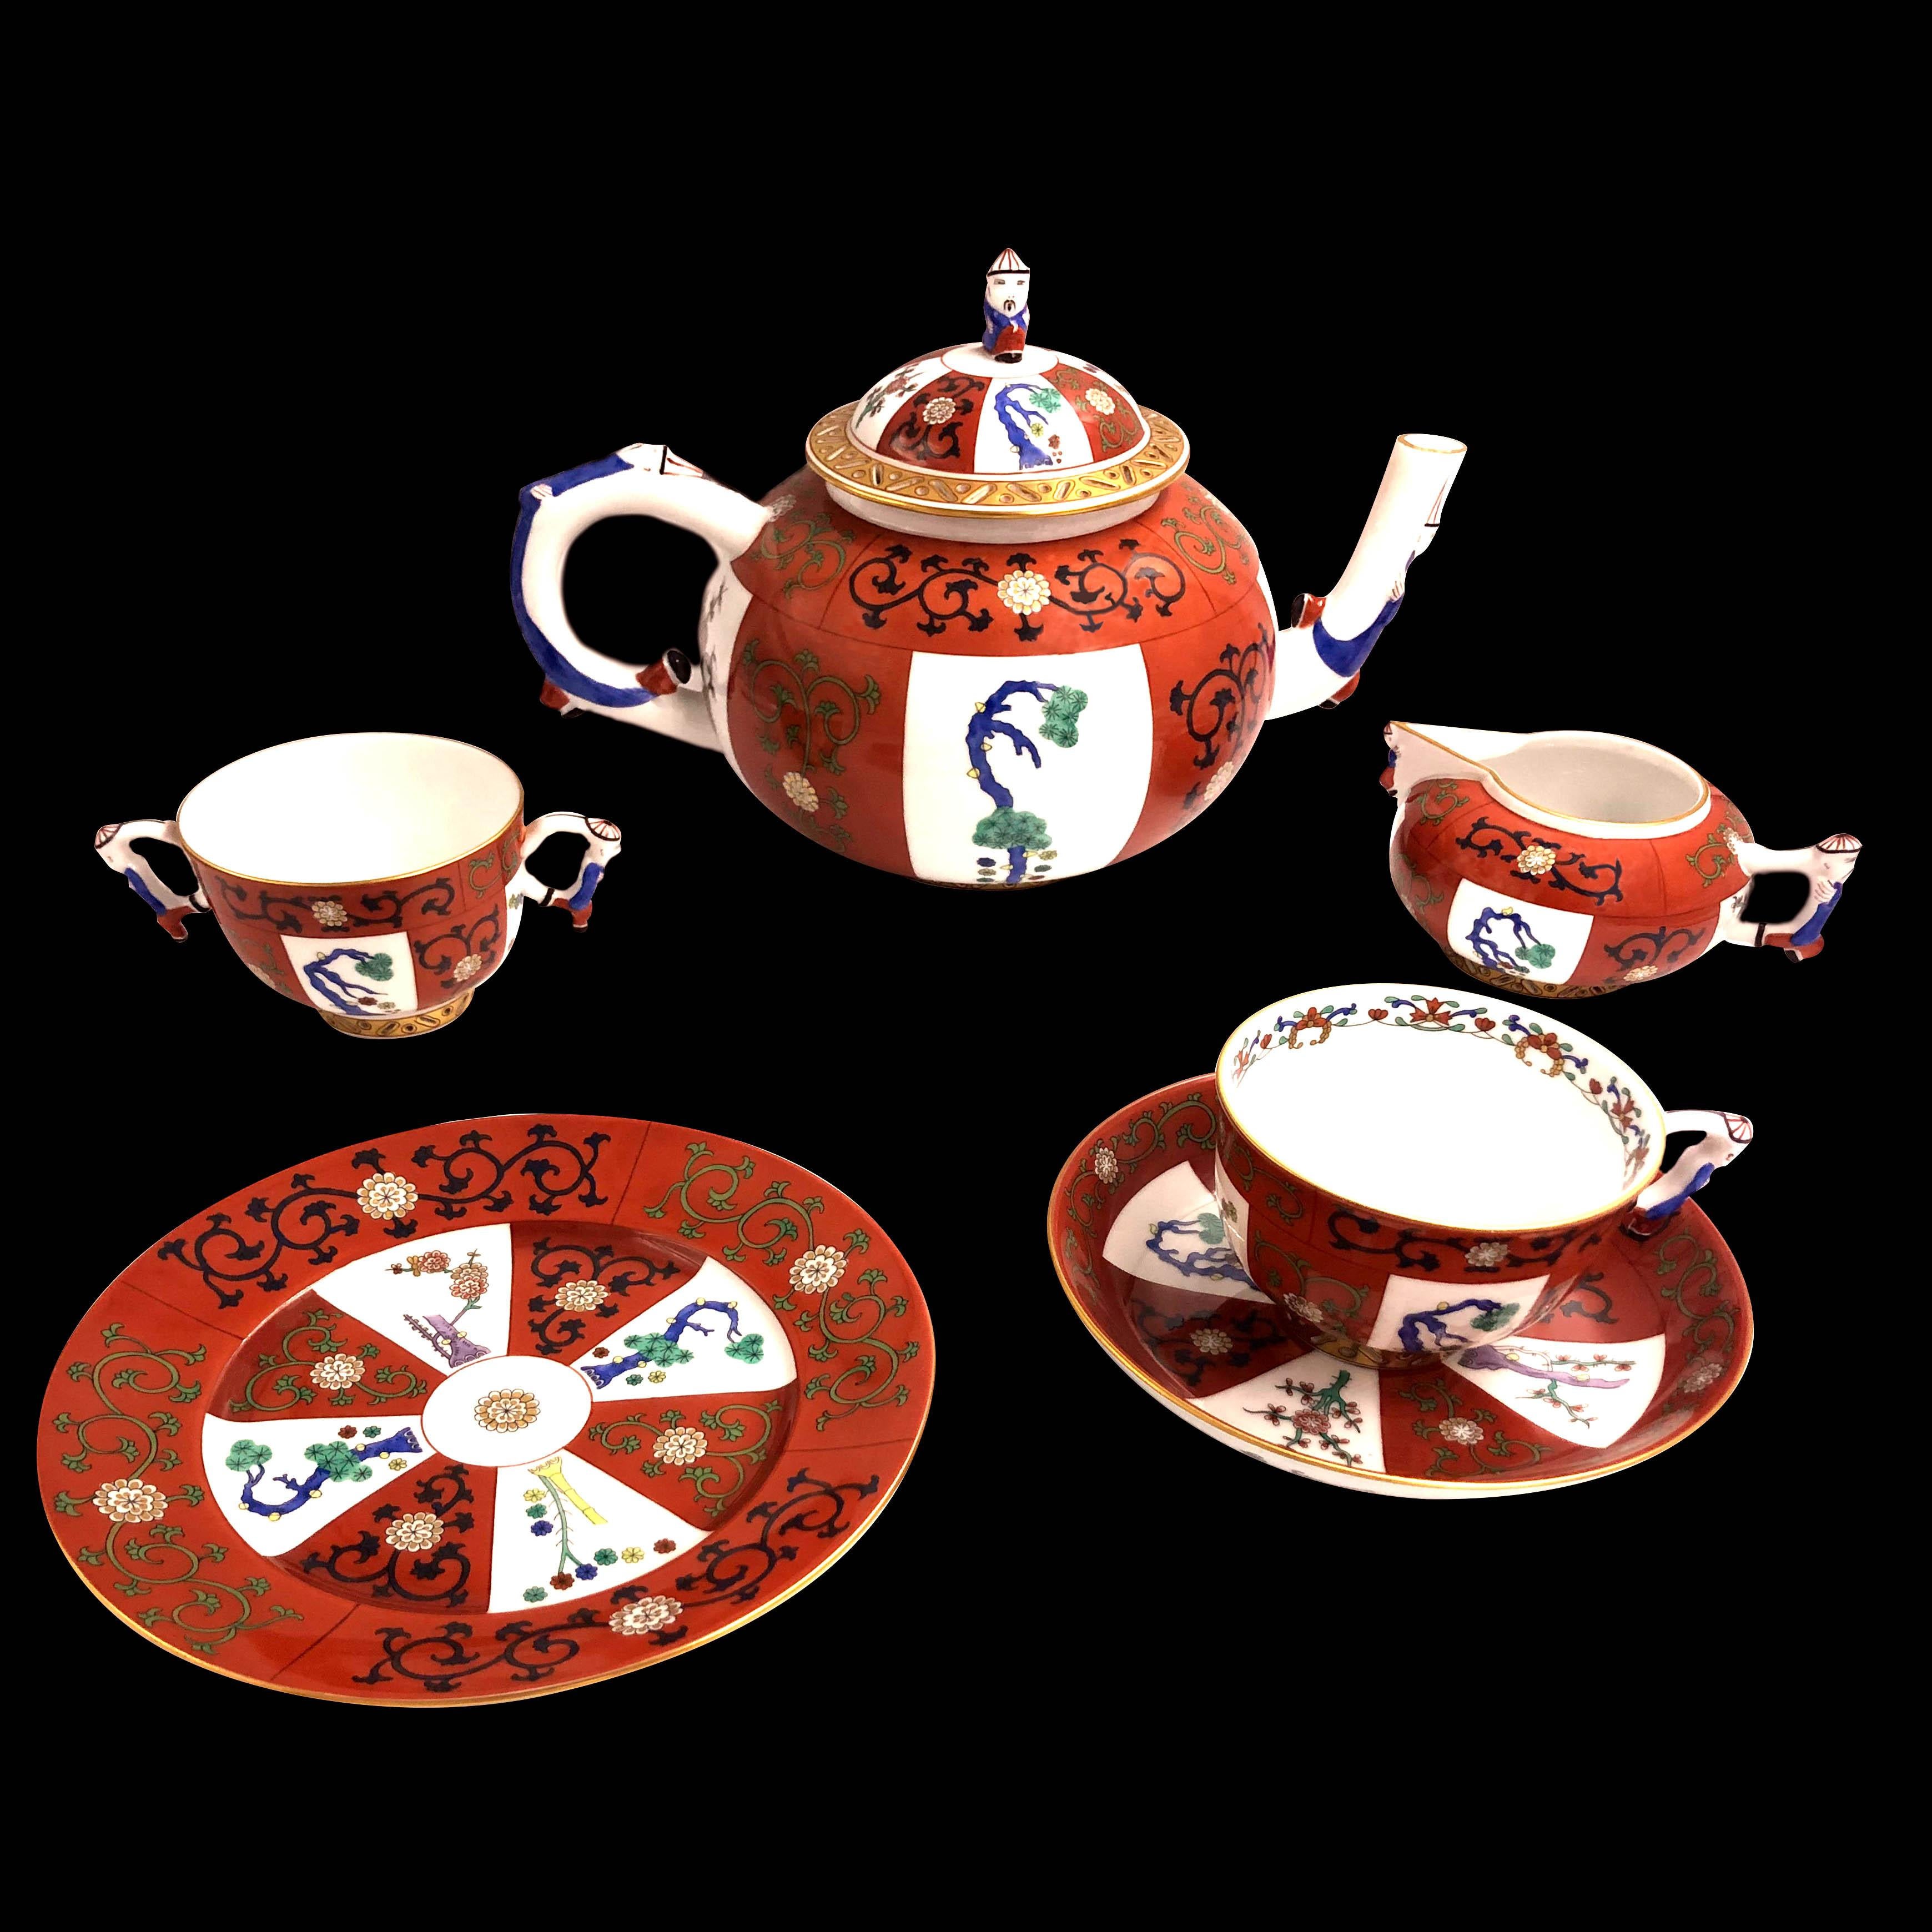 Hungarian Godollo Tea Set in Herend Porcelain for Famous Queen Elizabeth